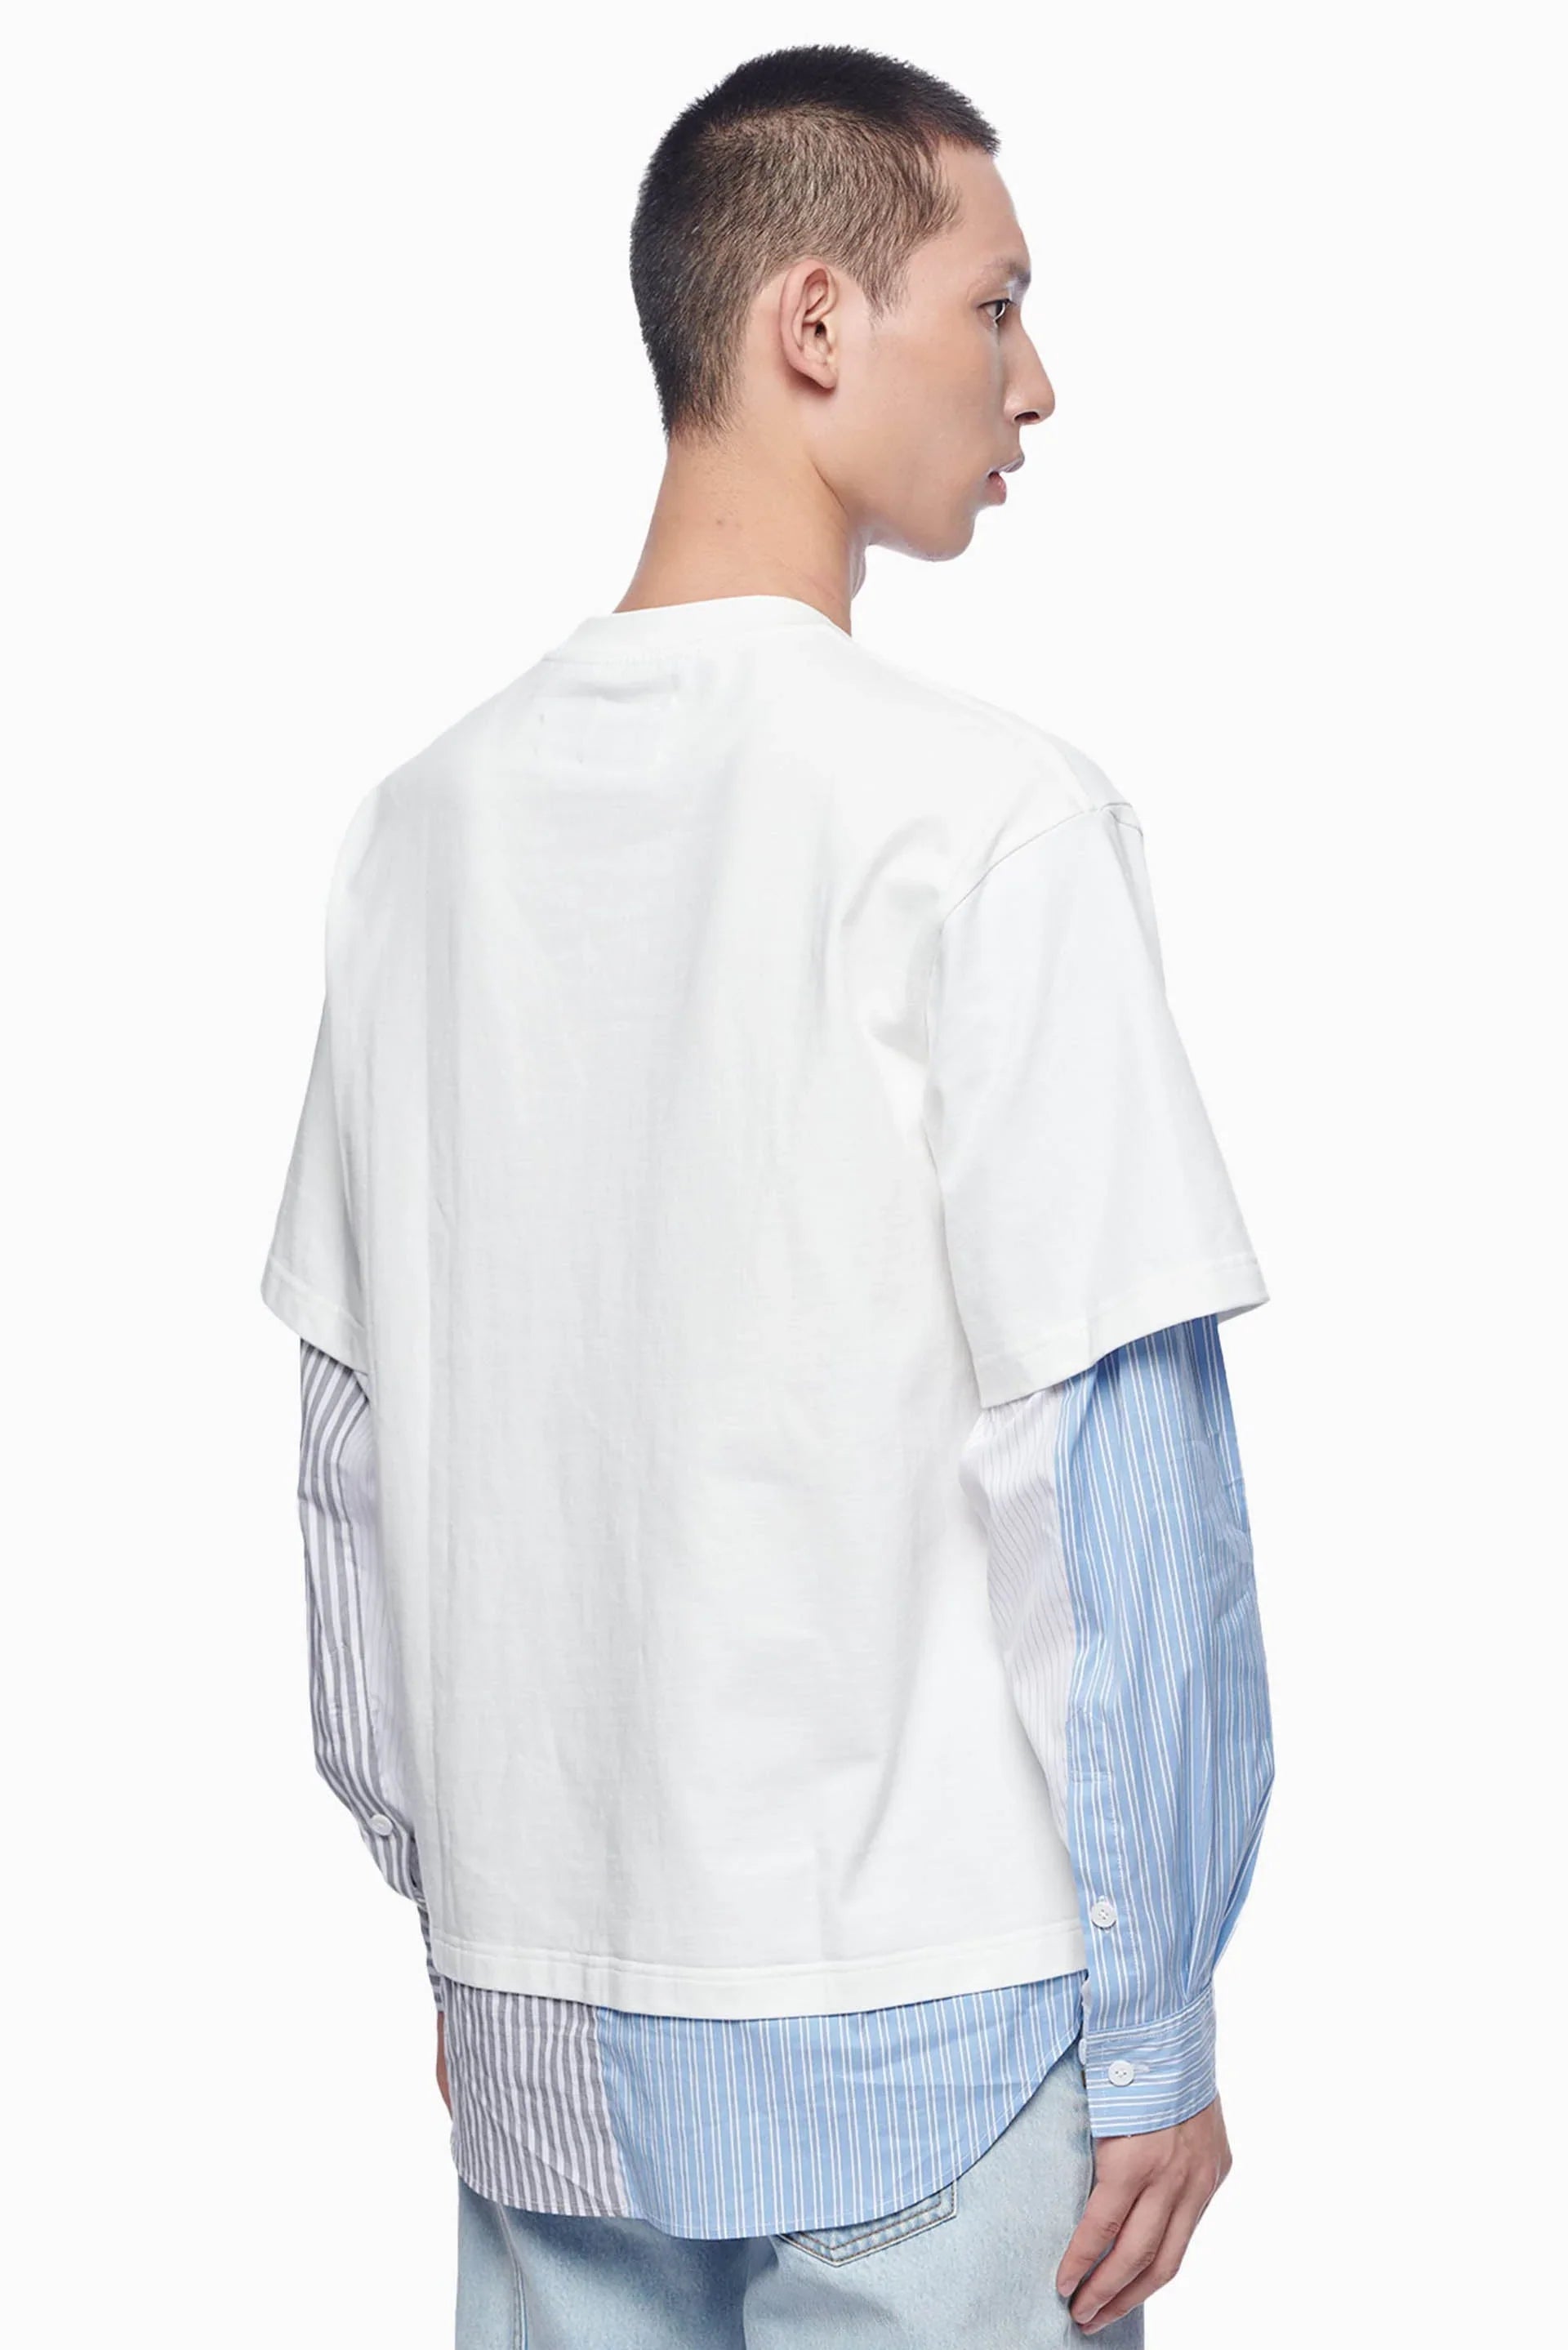 Feng Chen Wang Shirting Panelled Sweater - www ...